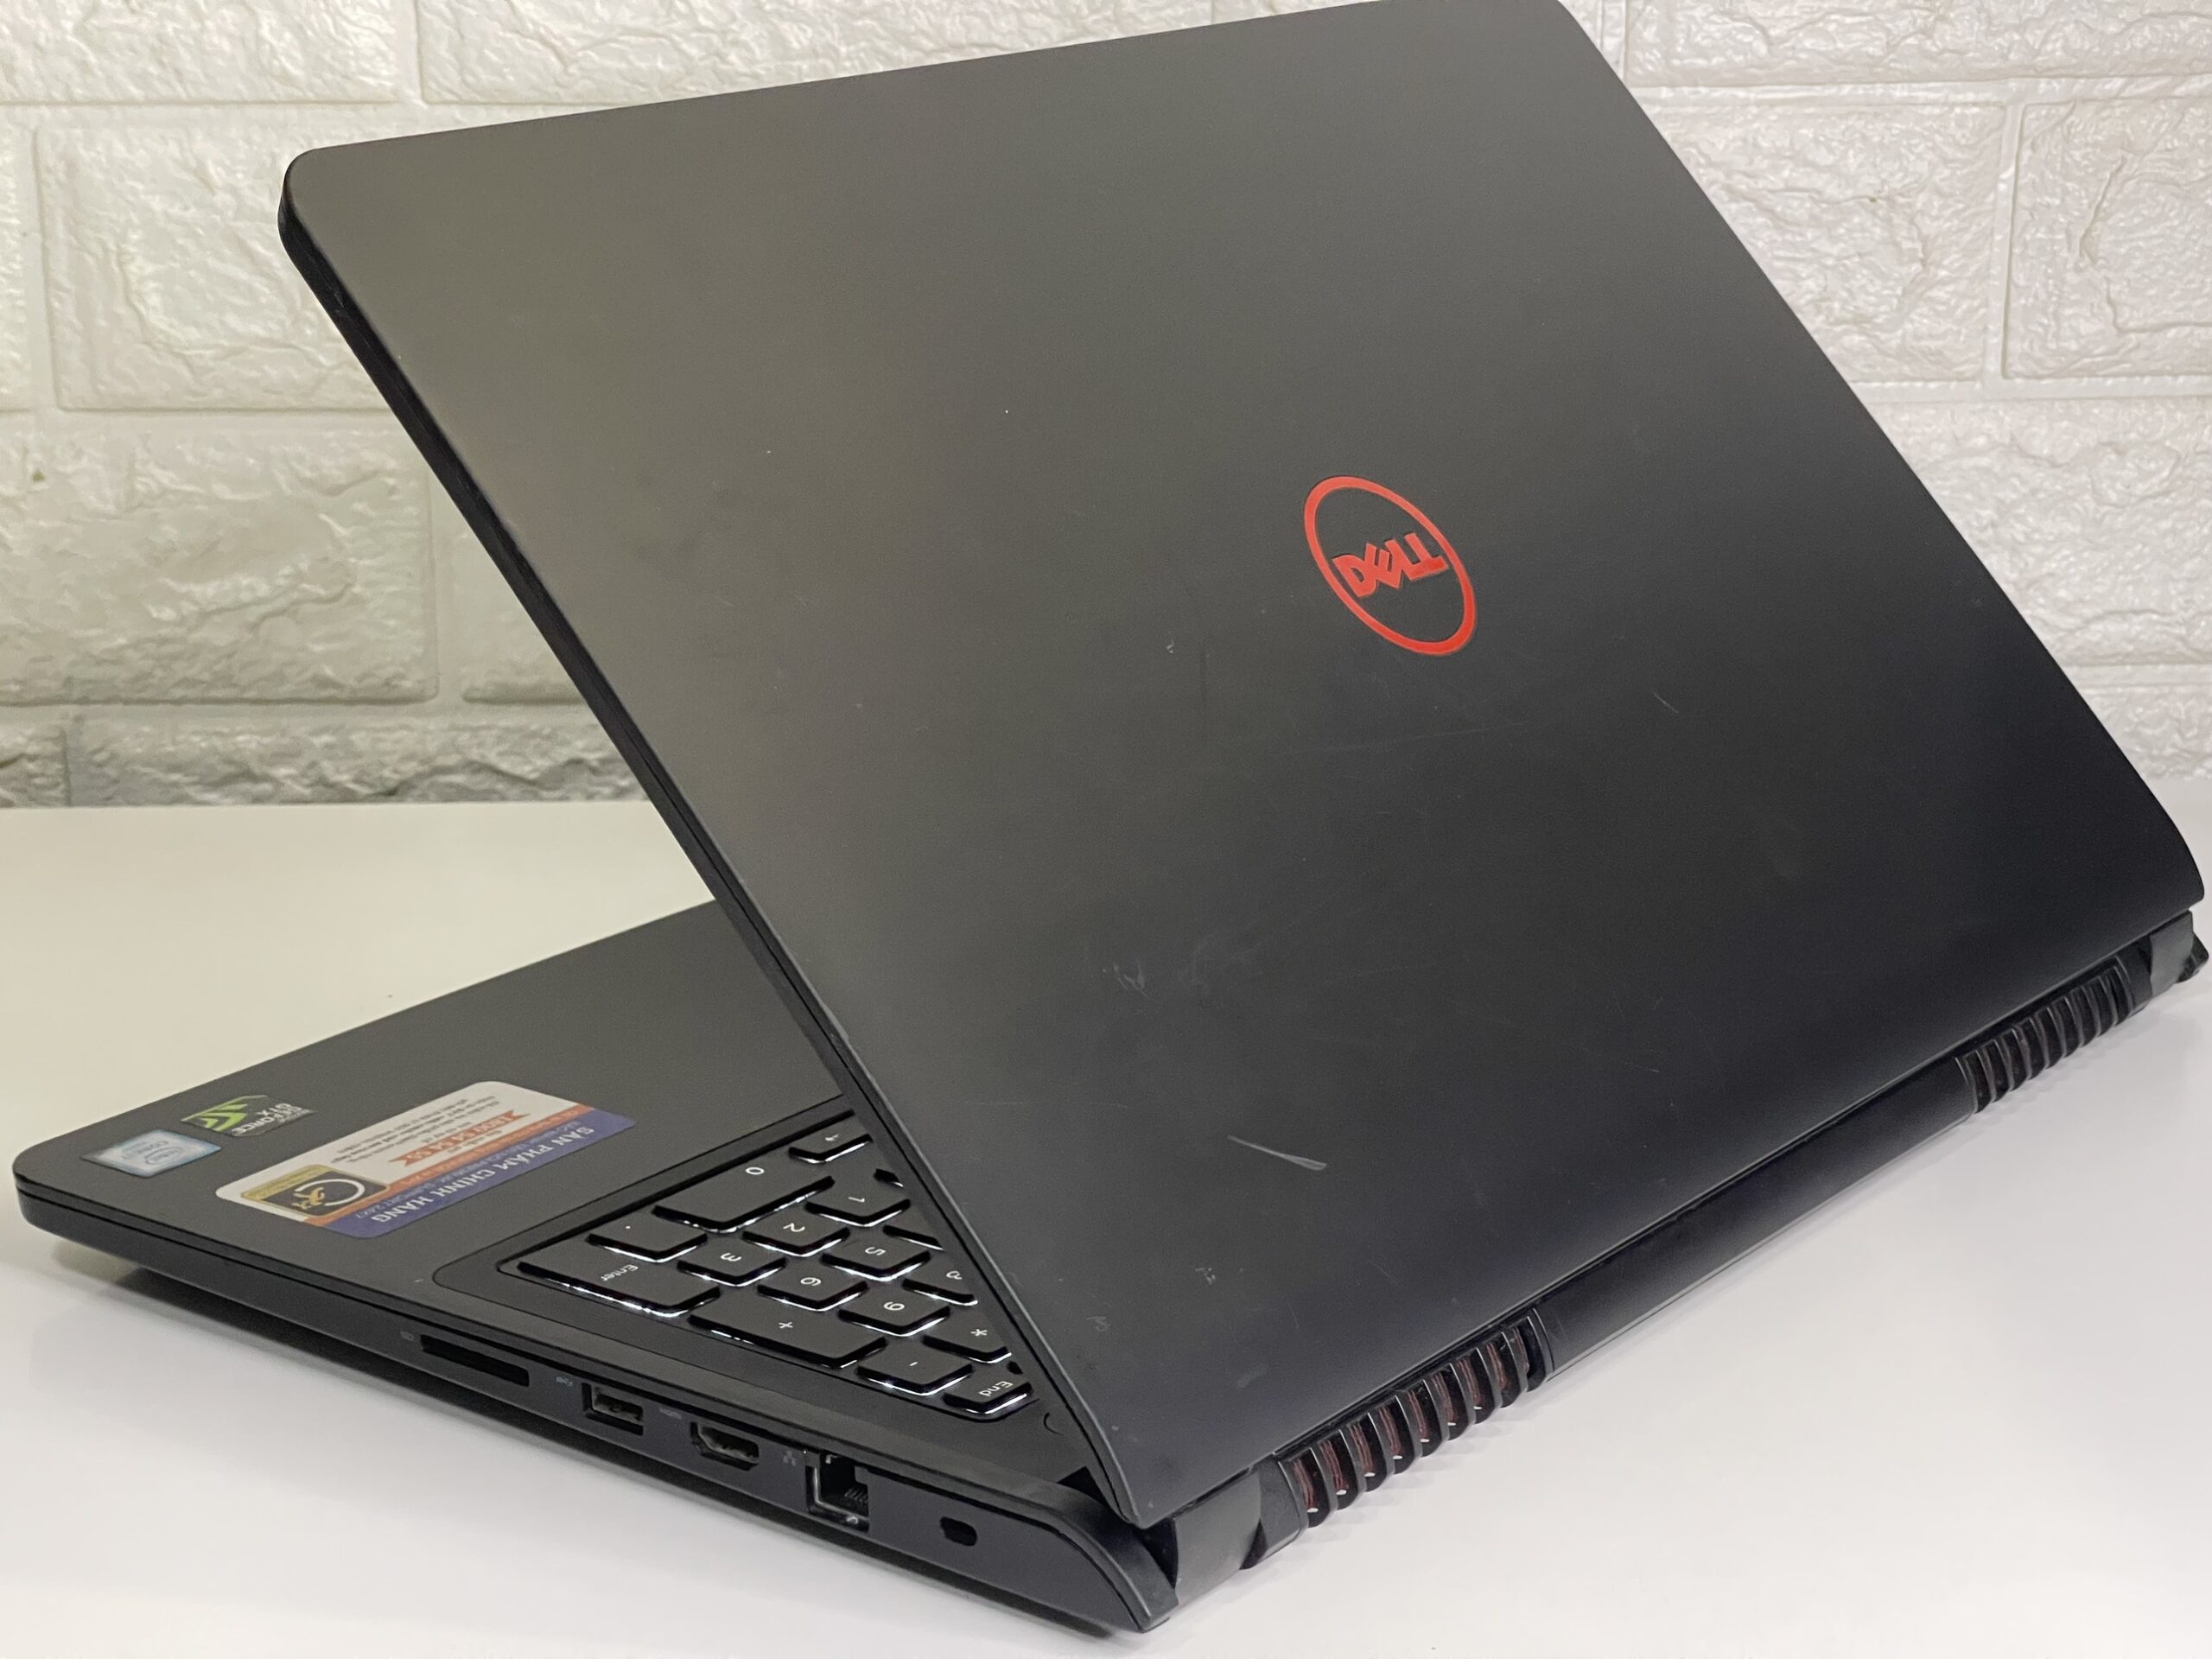 Laptop Dell 7559 I7 16Gb 128Gb 1Tb Gtx 960M